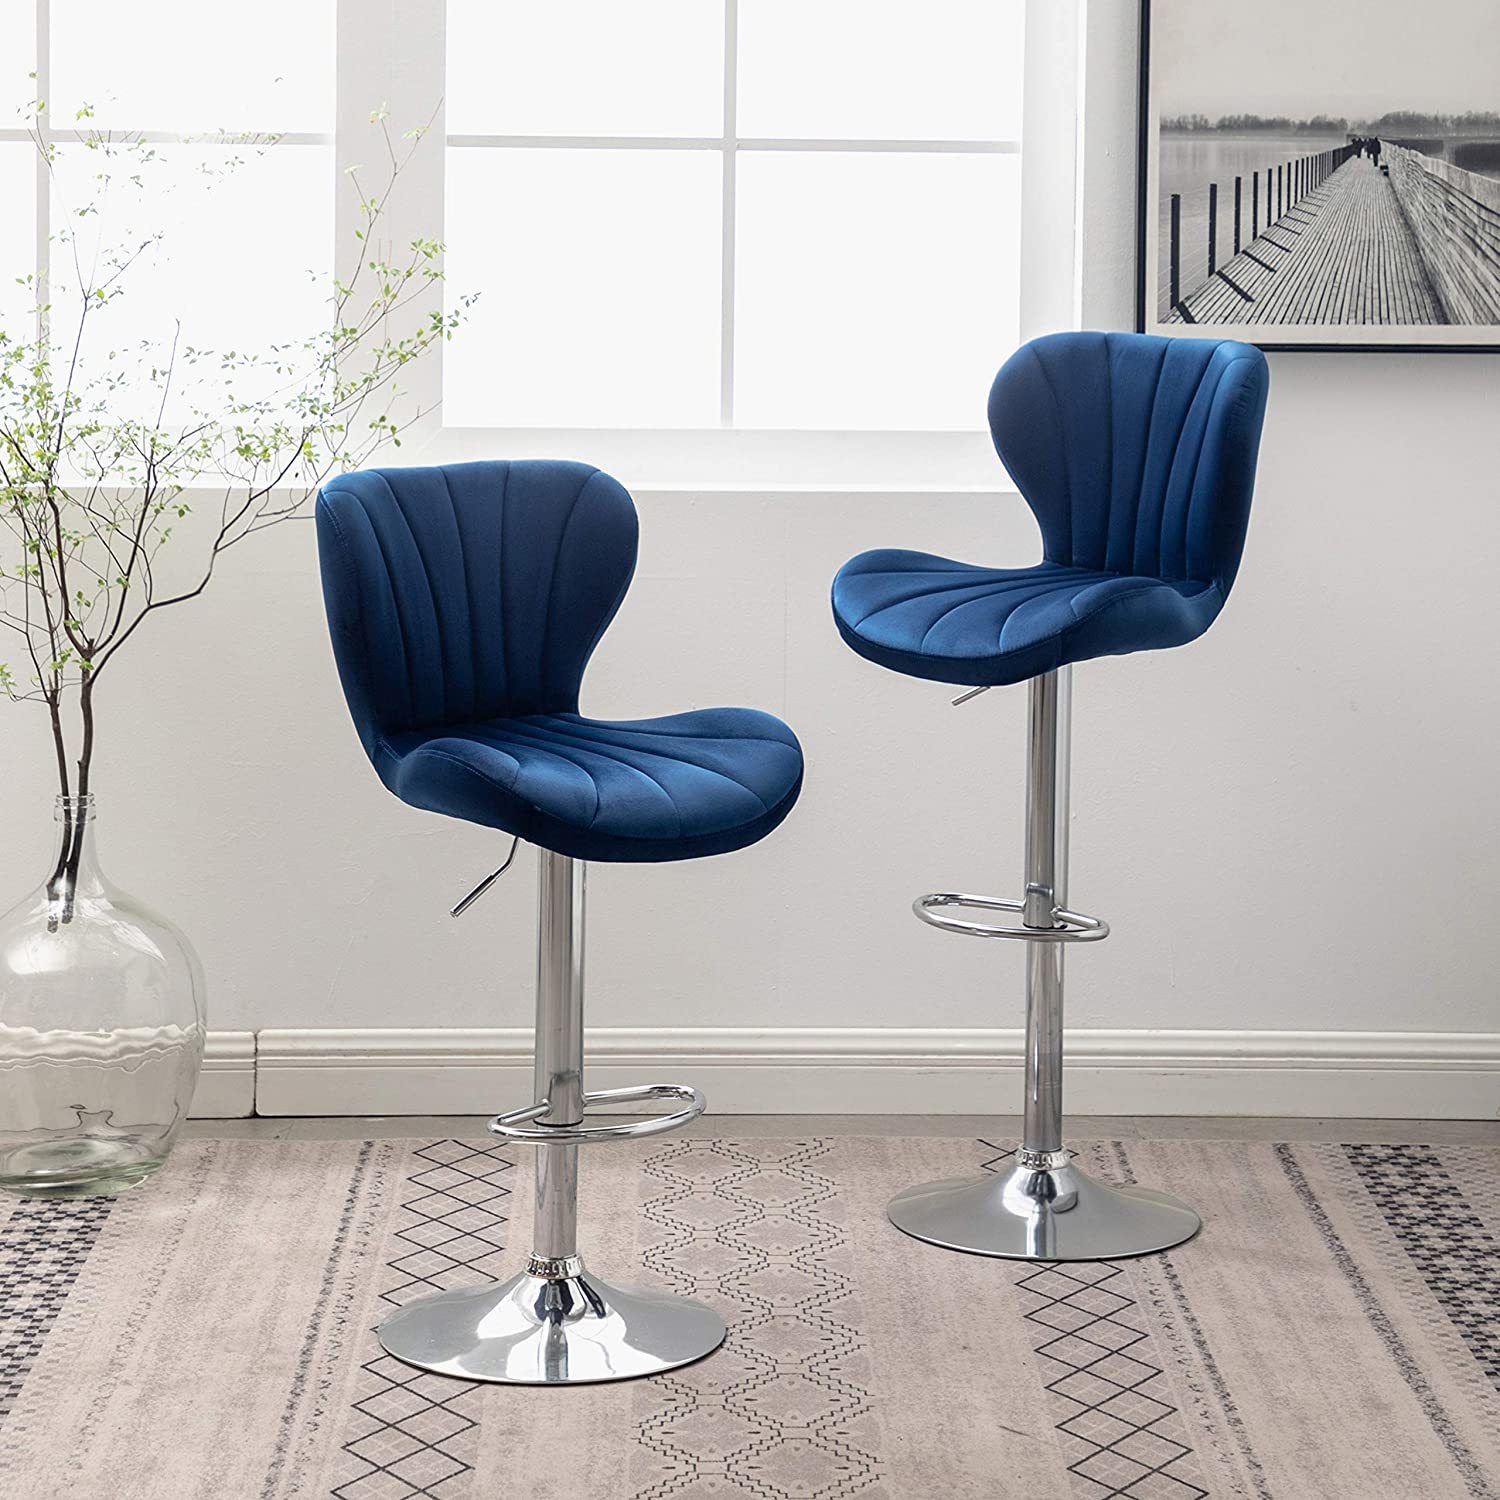 Roundhill Furniture Ellston Upholstered Adjustable Swivel Barstools in Blue, Set - $145.99